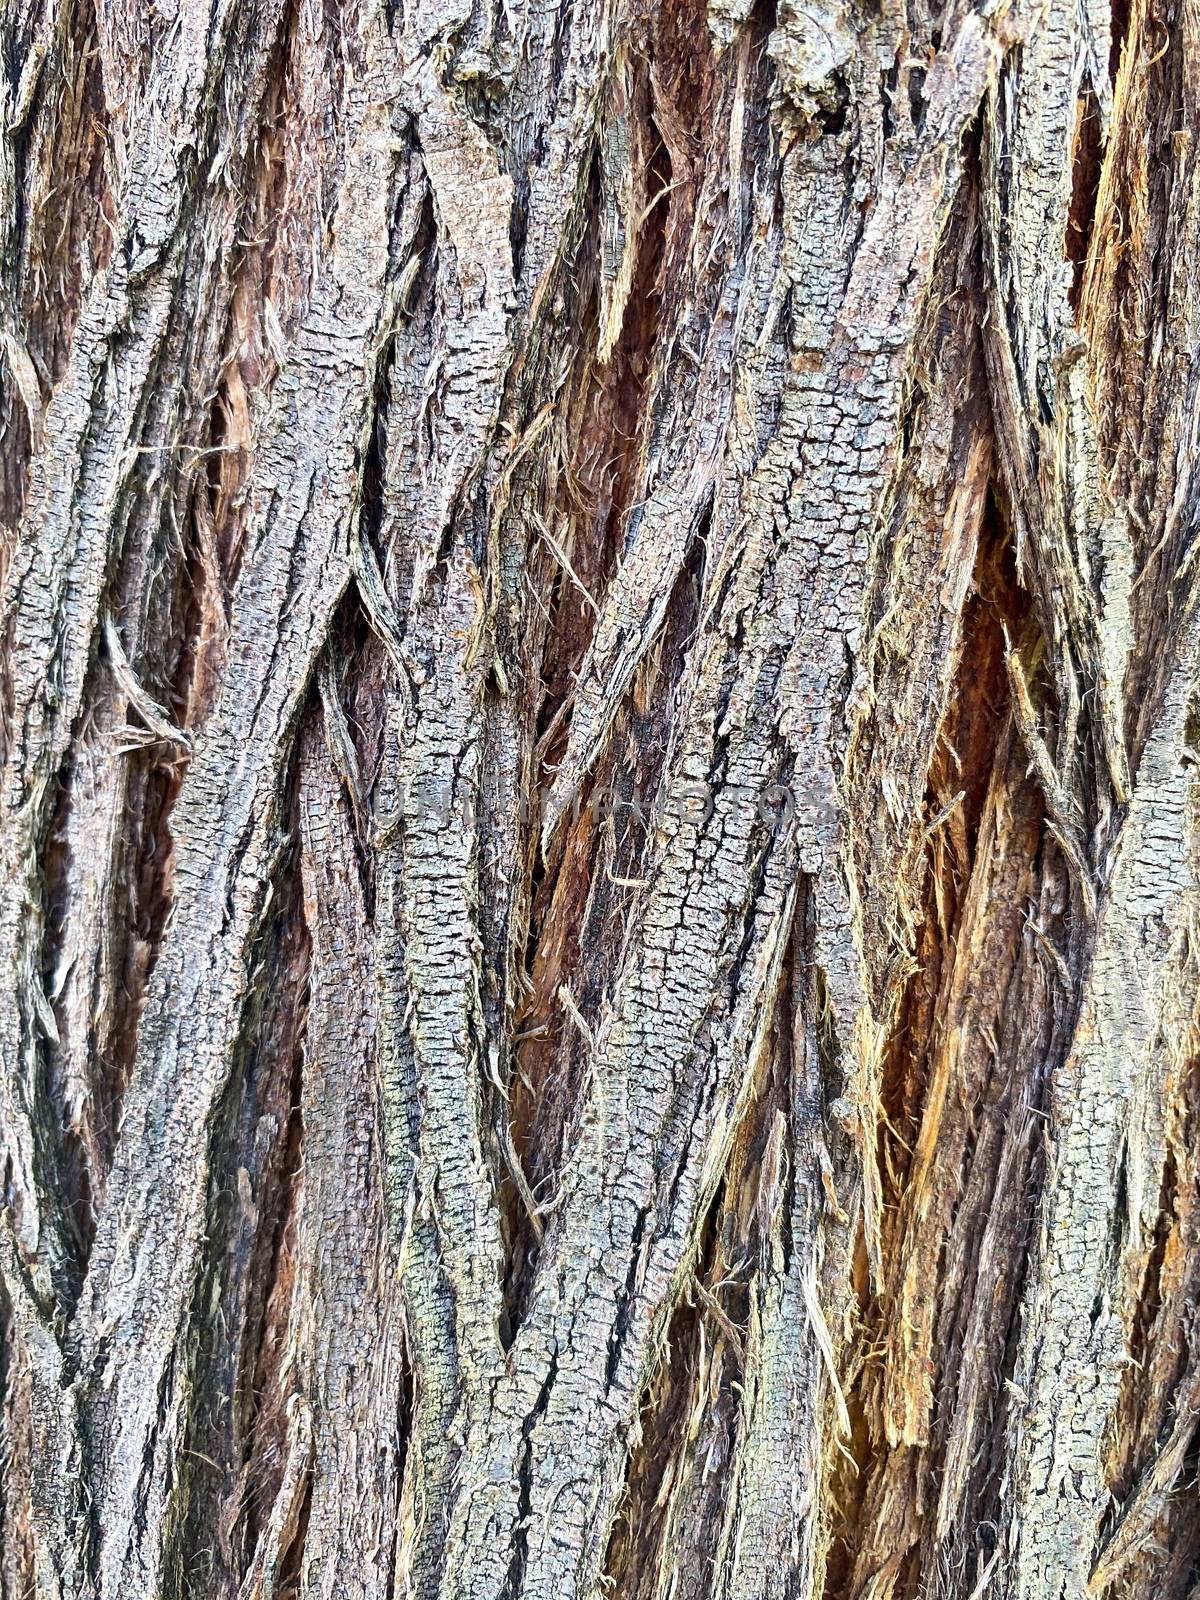 Closeup of tree trunk, wood texture, old tree bark texture